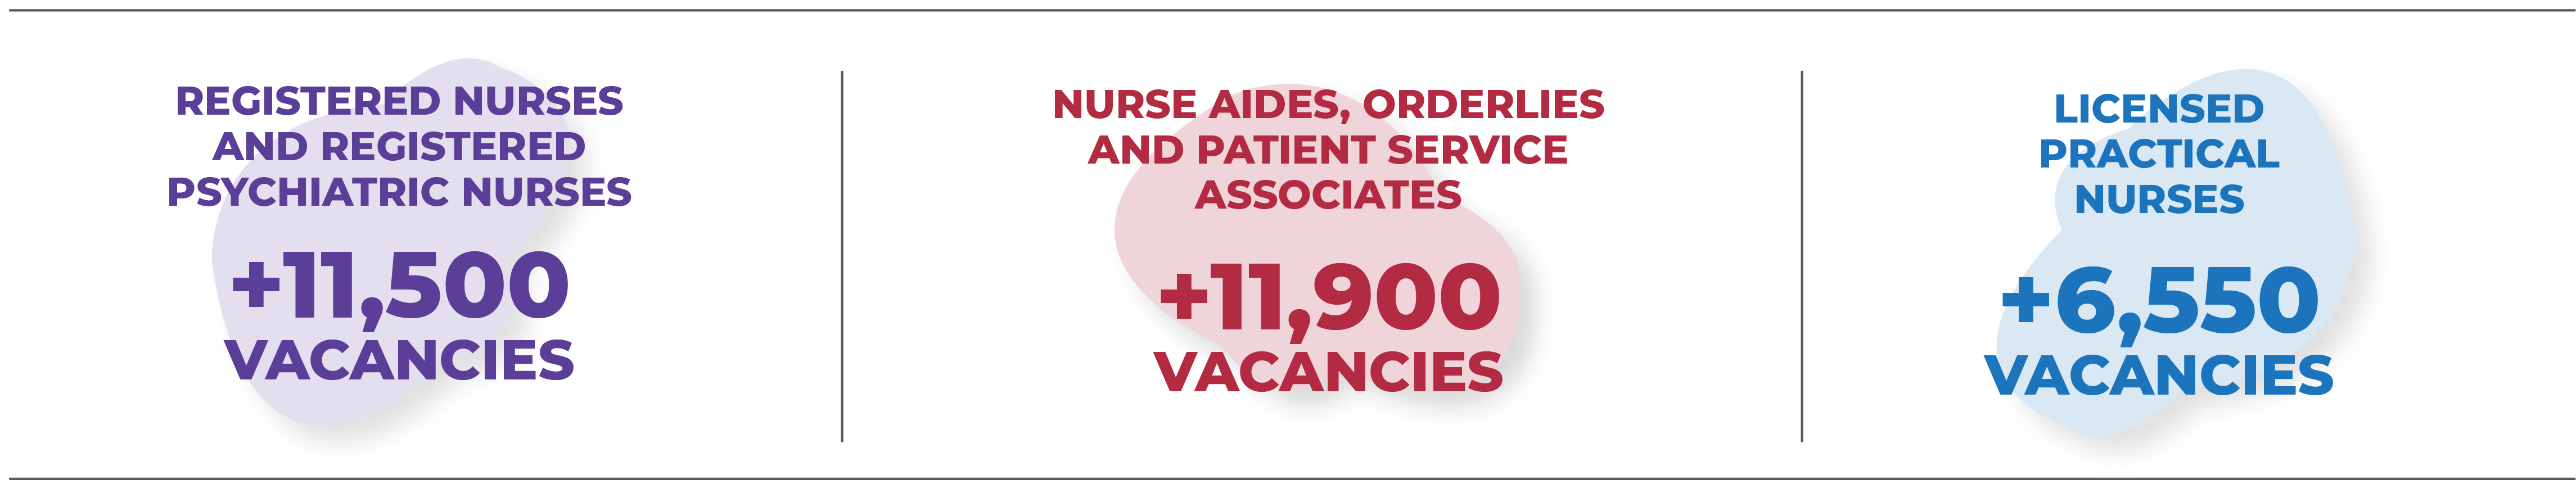 Over 11,500 vacancies for registered nurses, over 11,900 vacancies for nurse aides and orderlies, over 6,500 vacancies for licensed practical nurses